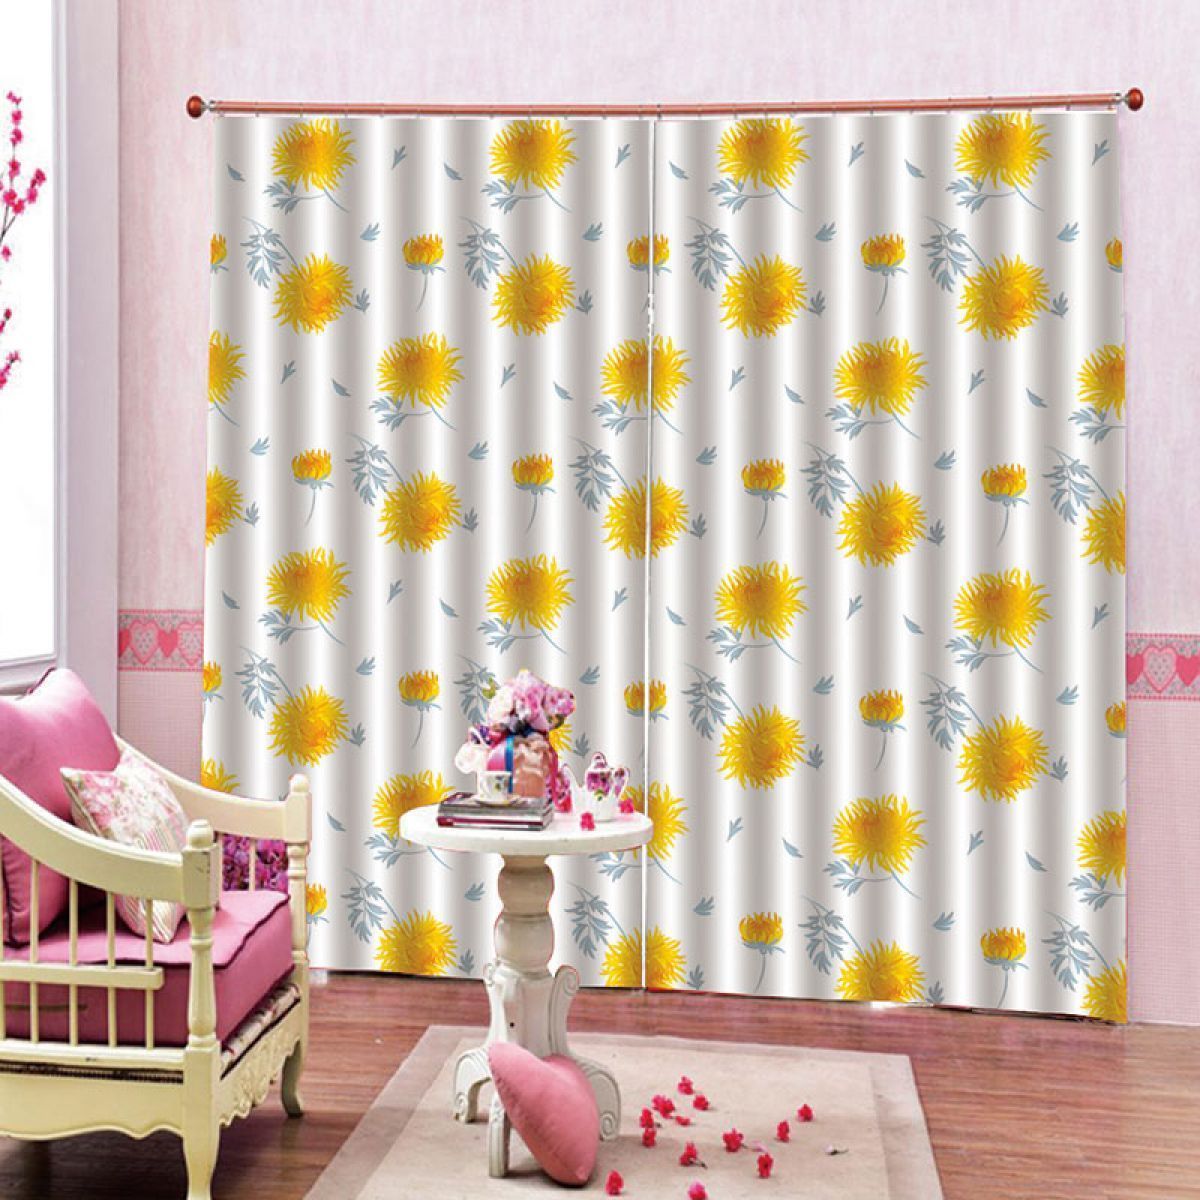 chrysanthemum yellow and white printed window curtain home decor 7021